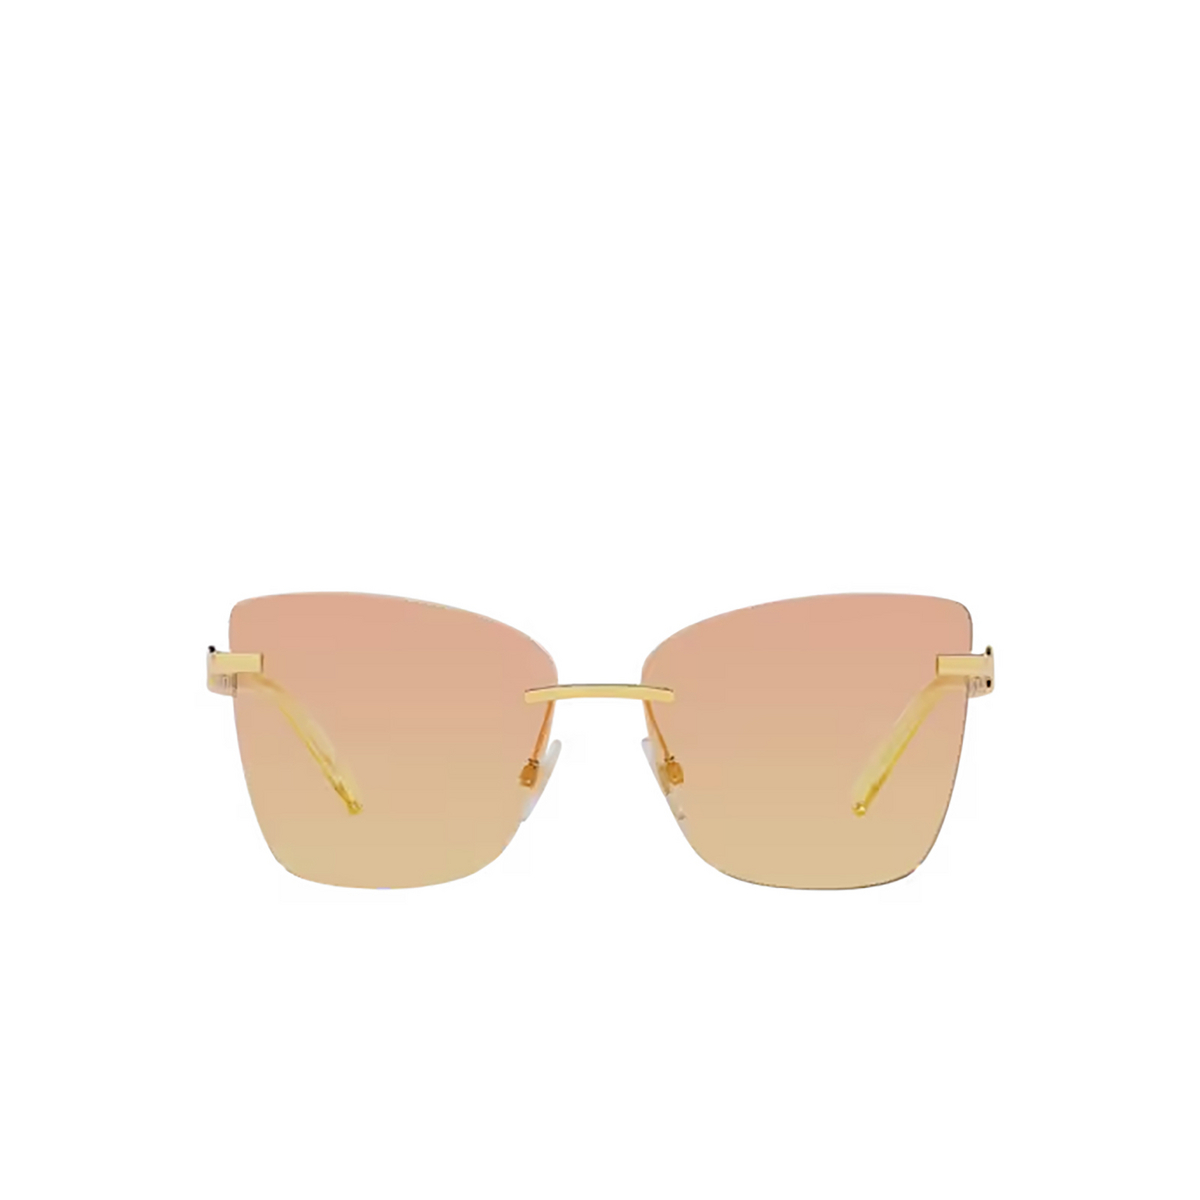 Dolce & Gabbana DG2289 Sunglasses 02/EL Gold/orange - front view